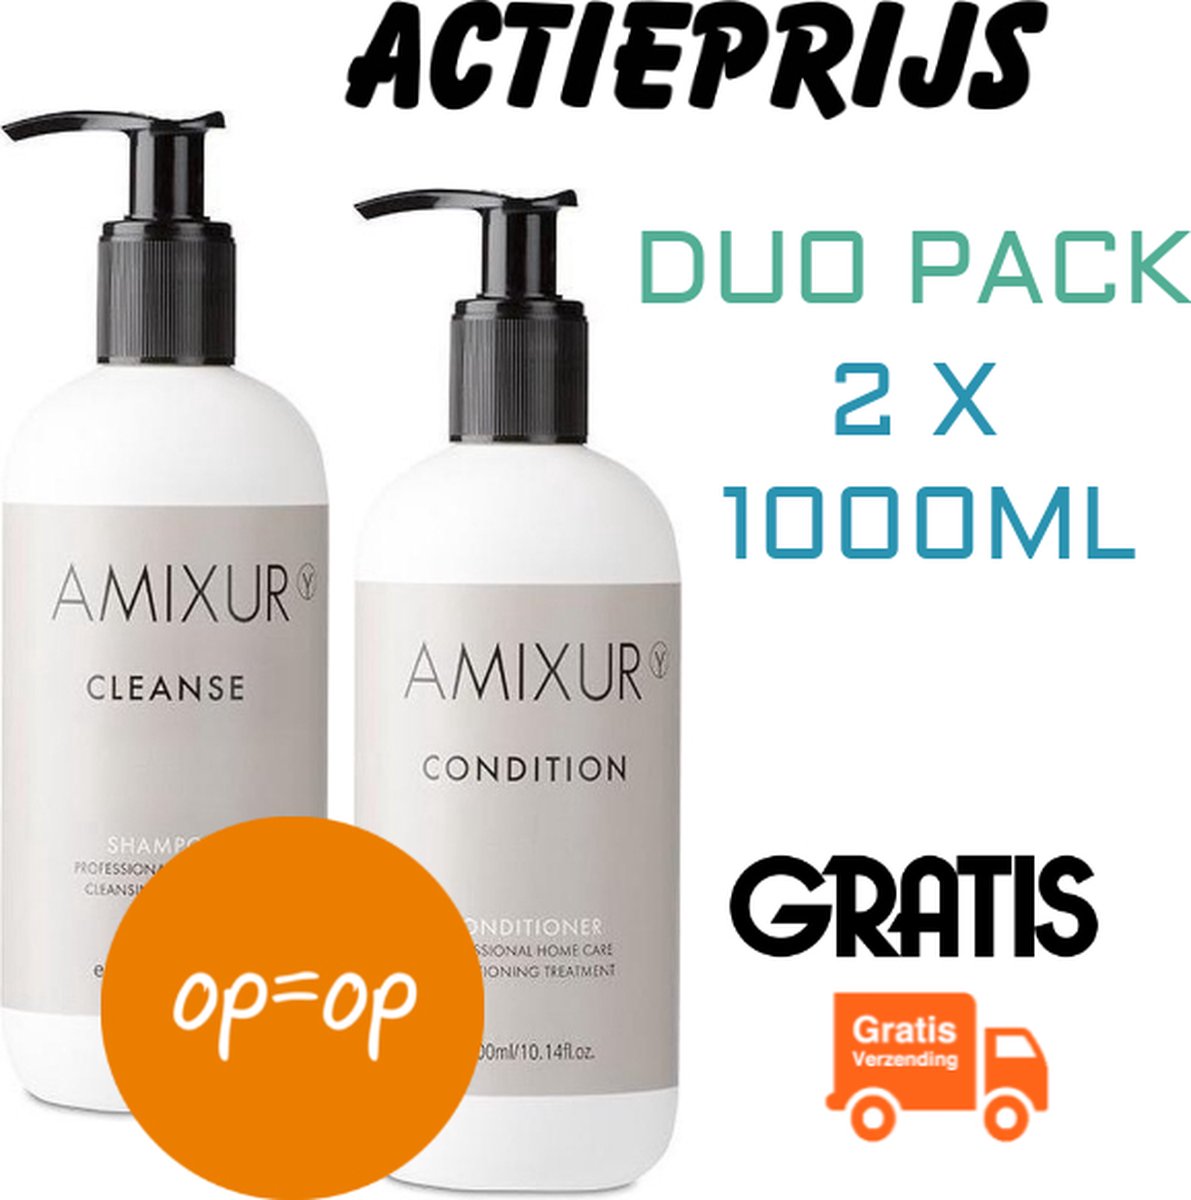 AMIXUR Duo Pack Shampoo / Conditioner 2 x 1000ml